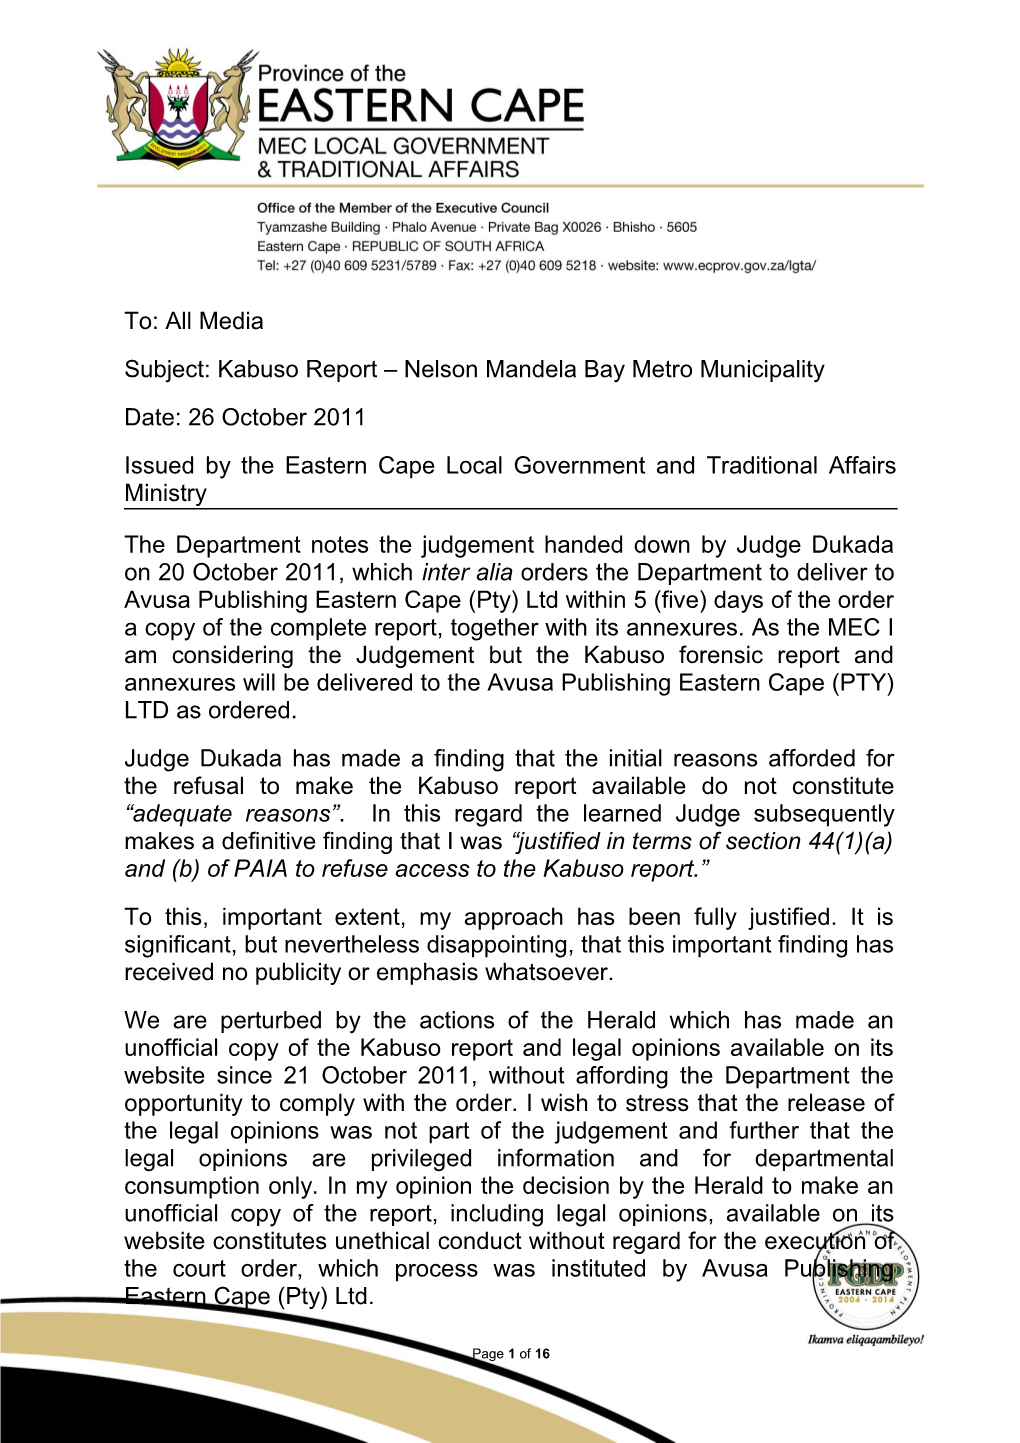 Subject: Kabuso Report Nelson Mandela Bay Metro Municipality